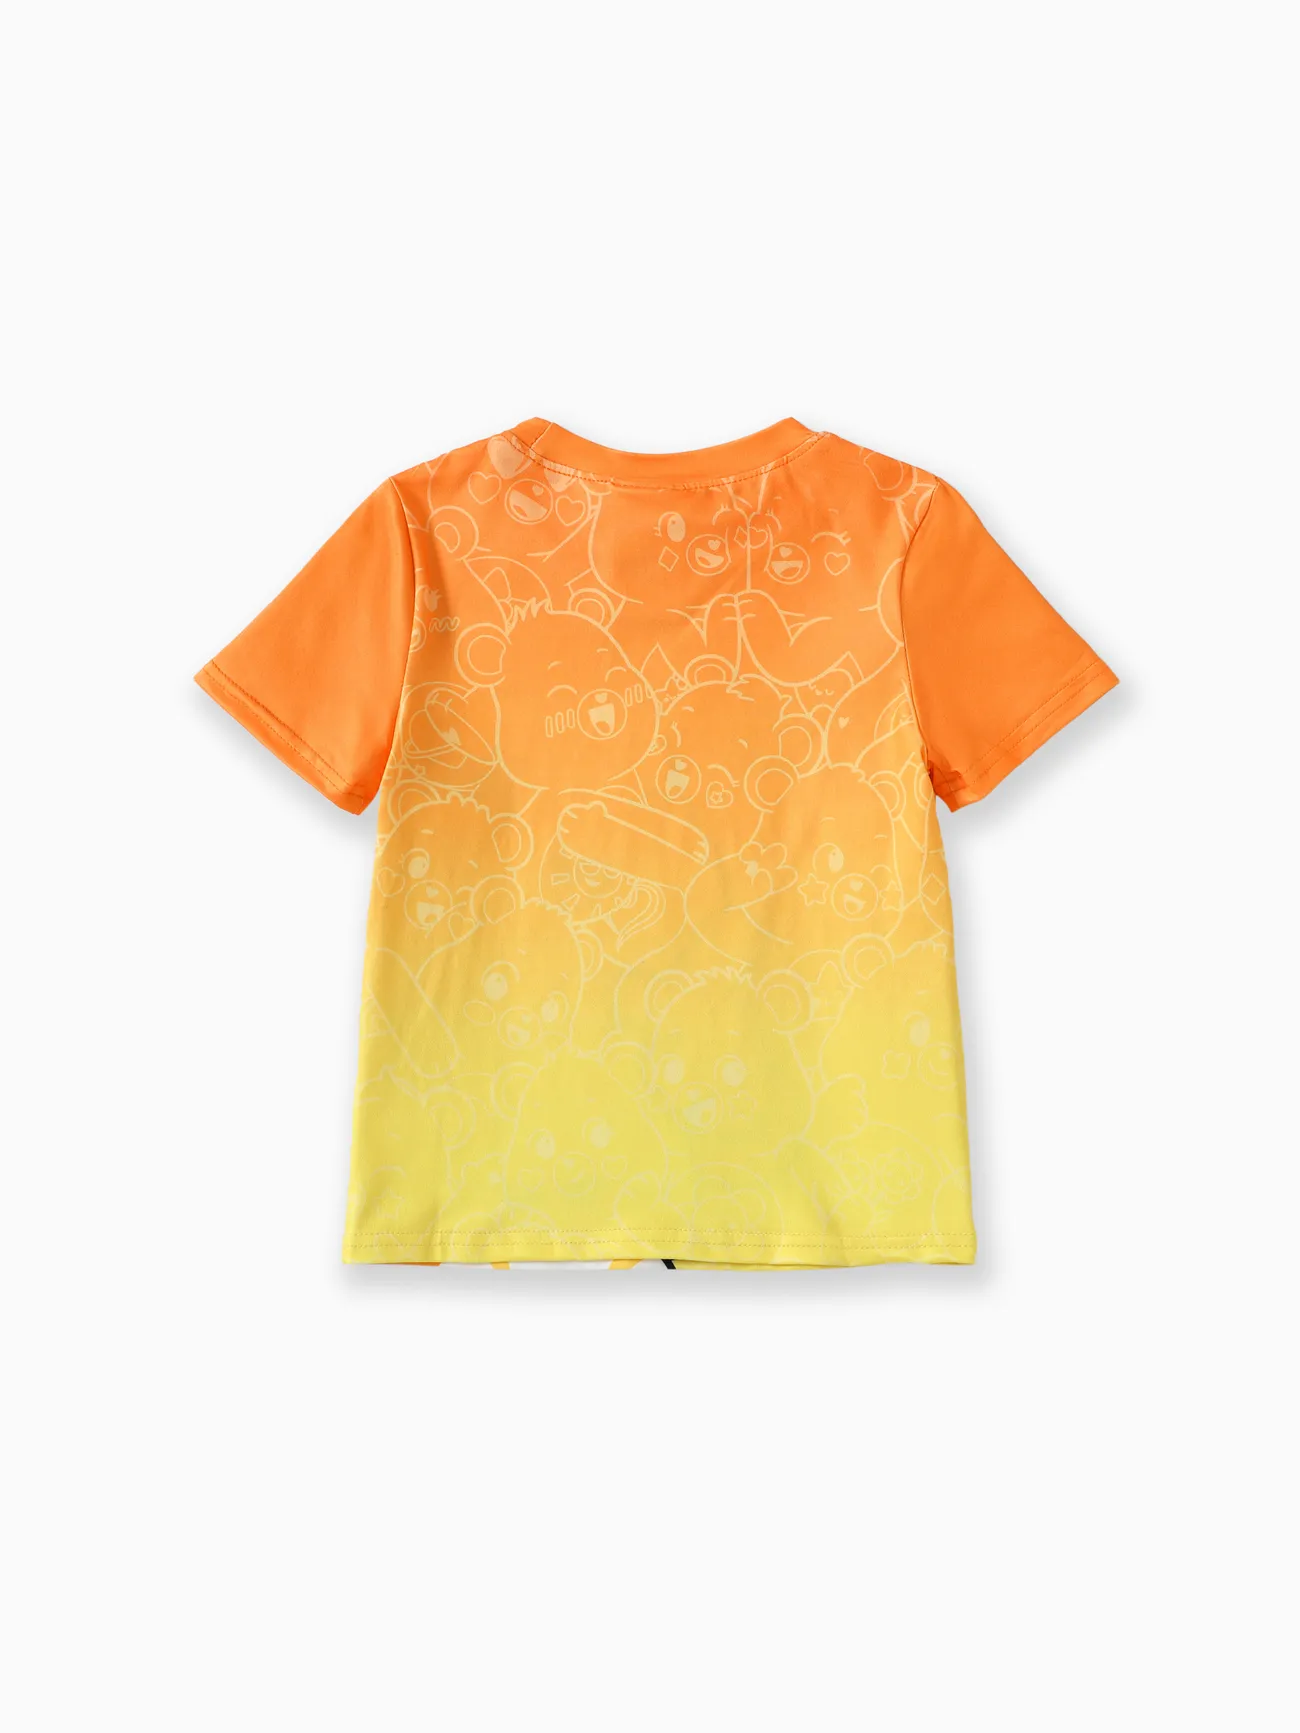 Ositos Cariñositos Unisex Infantil Camiseta Naranja big image 1